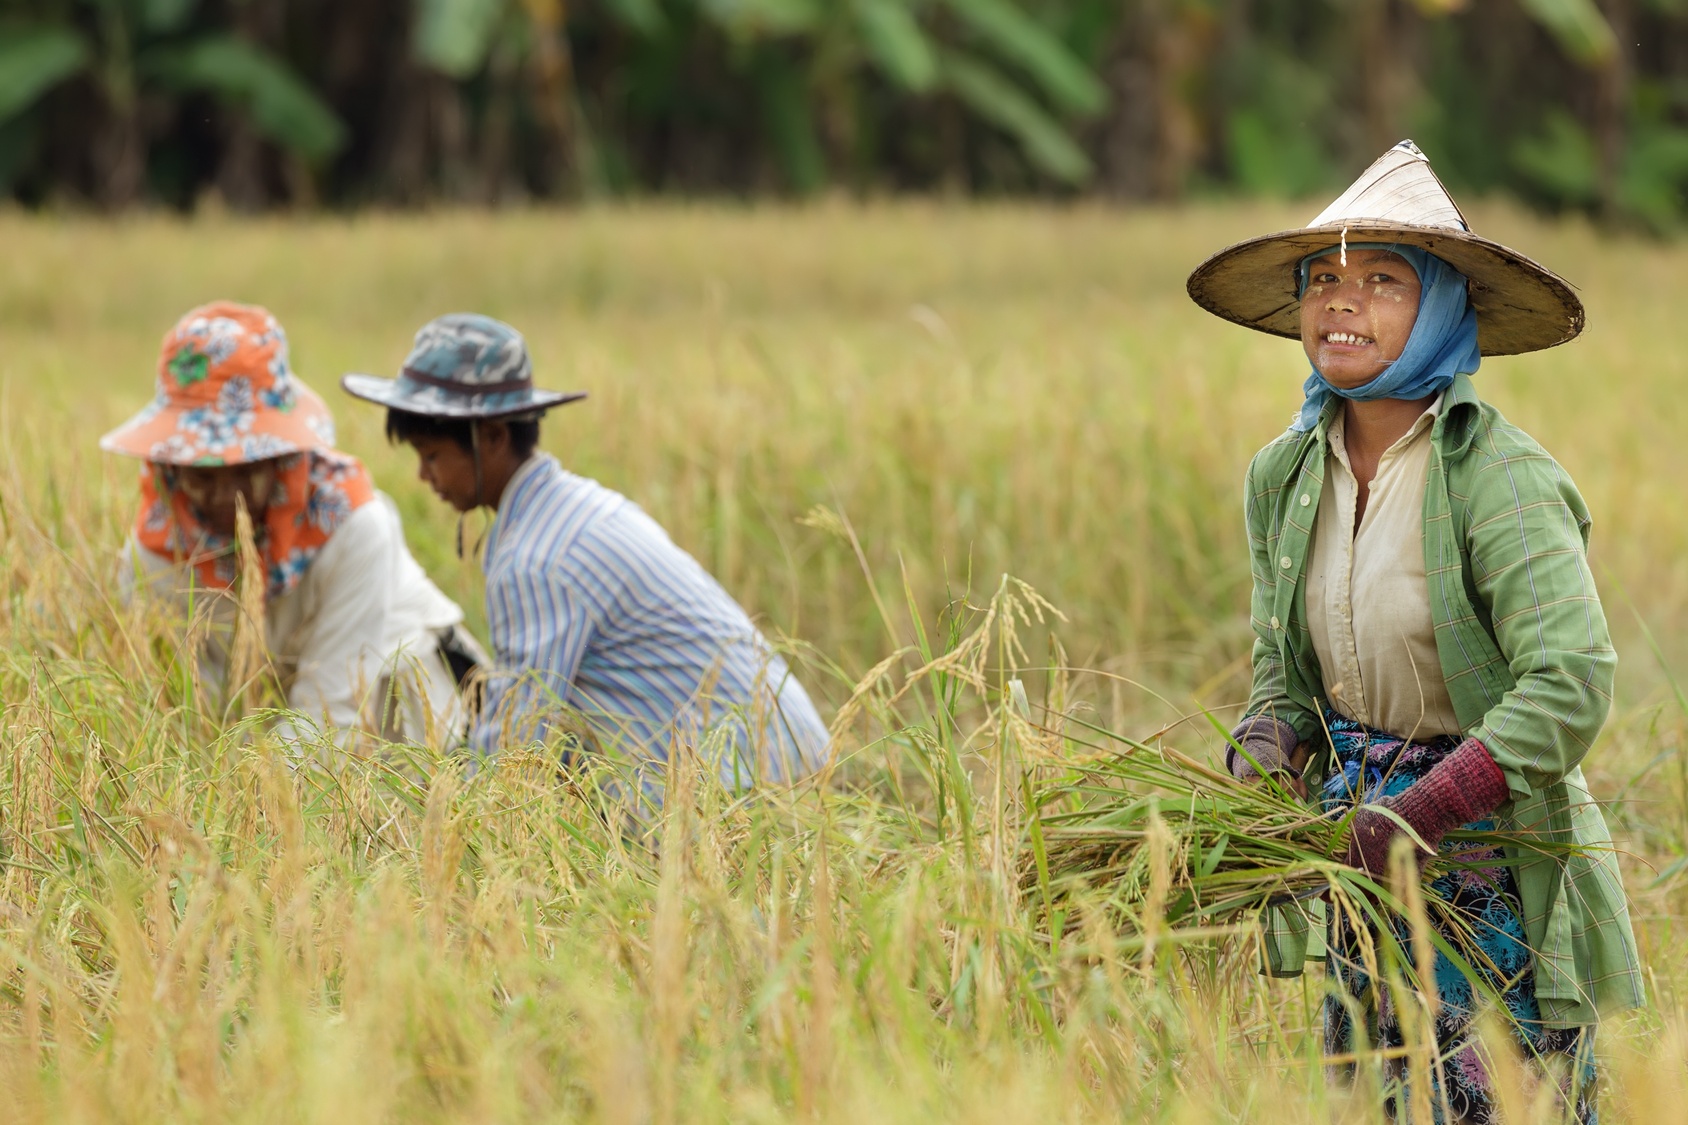 farmer harvesting rice